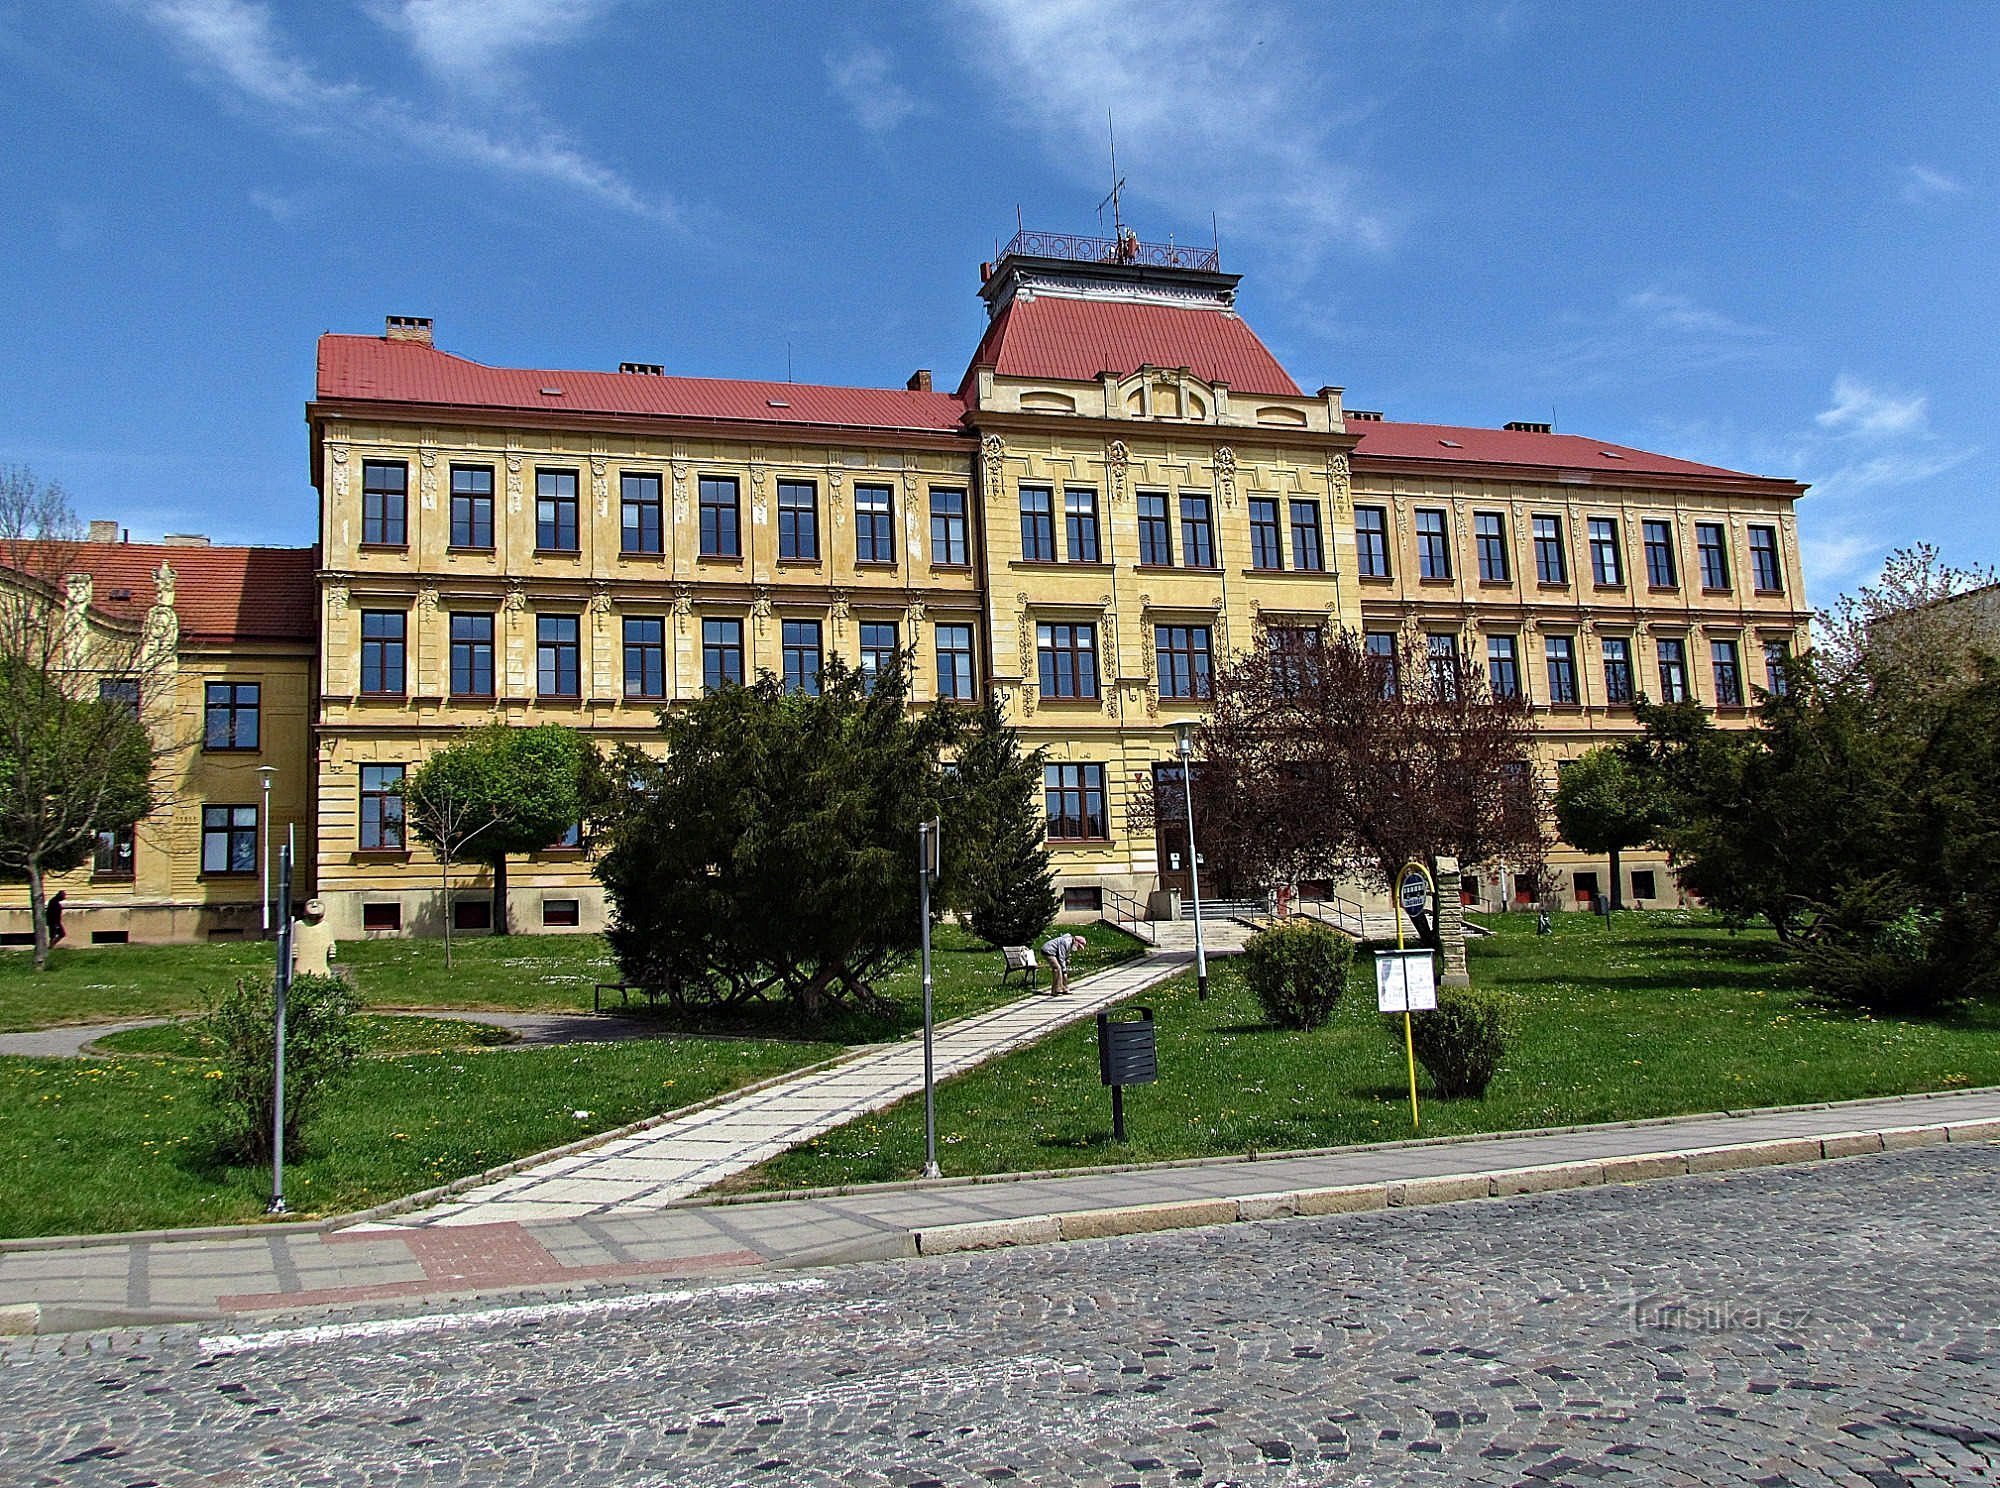 Uherský Brod - historic elementary school building